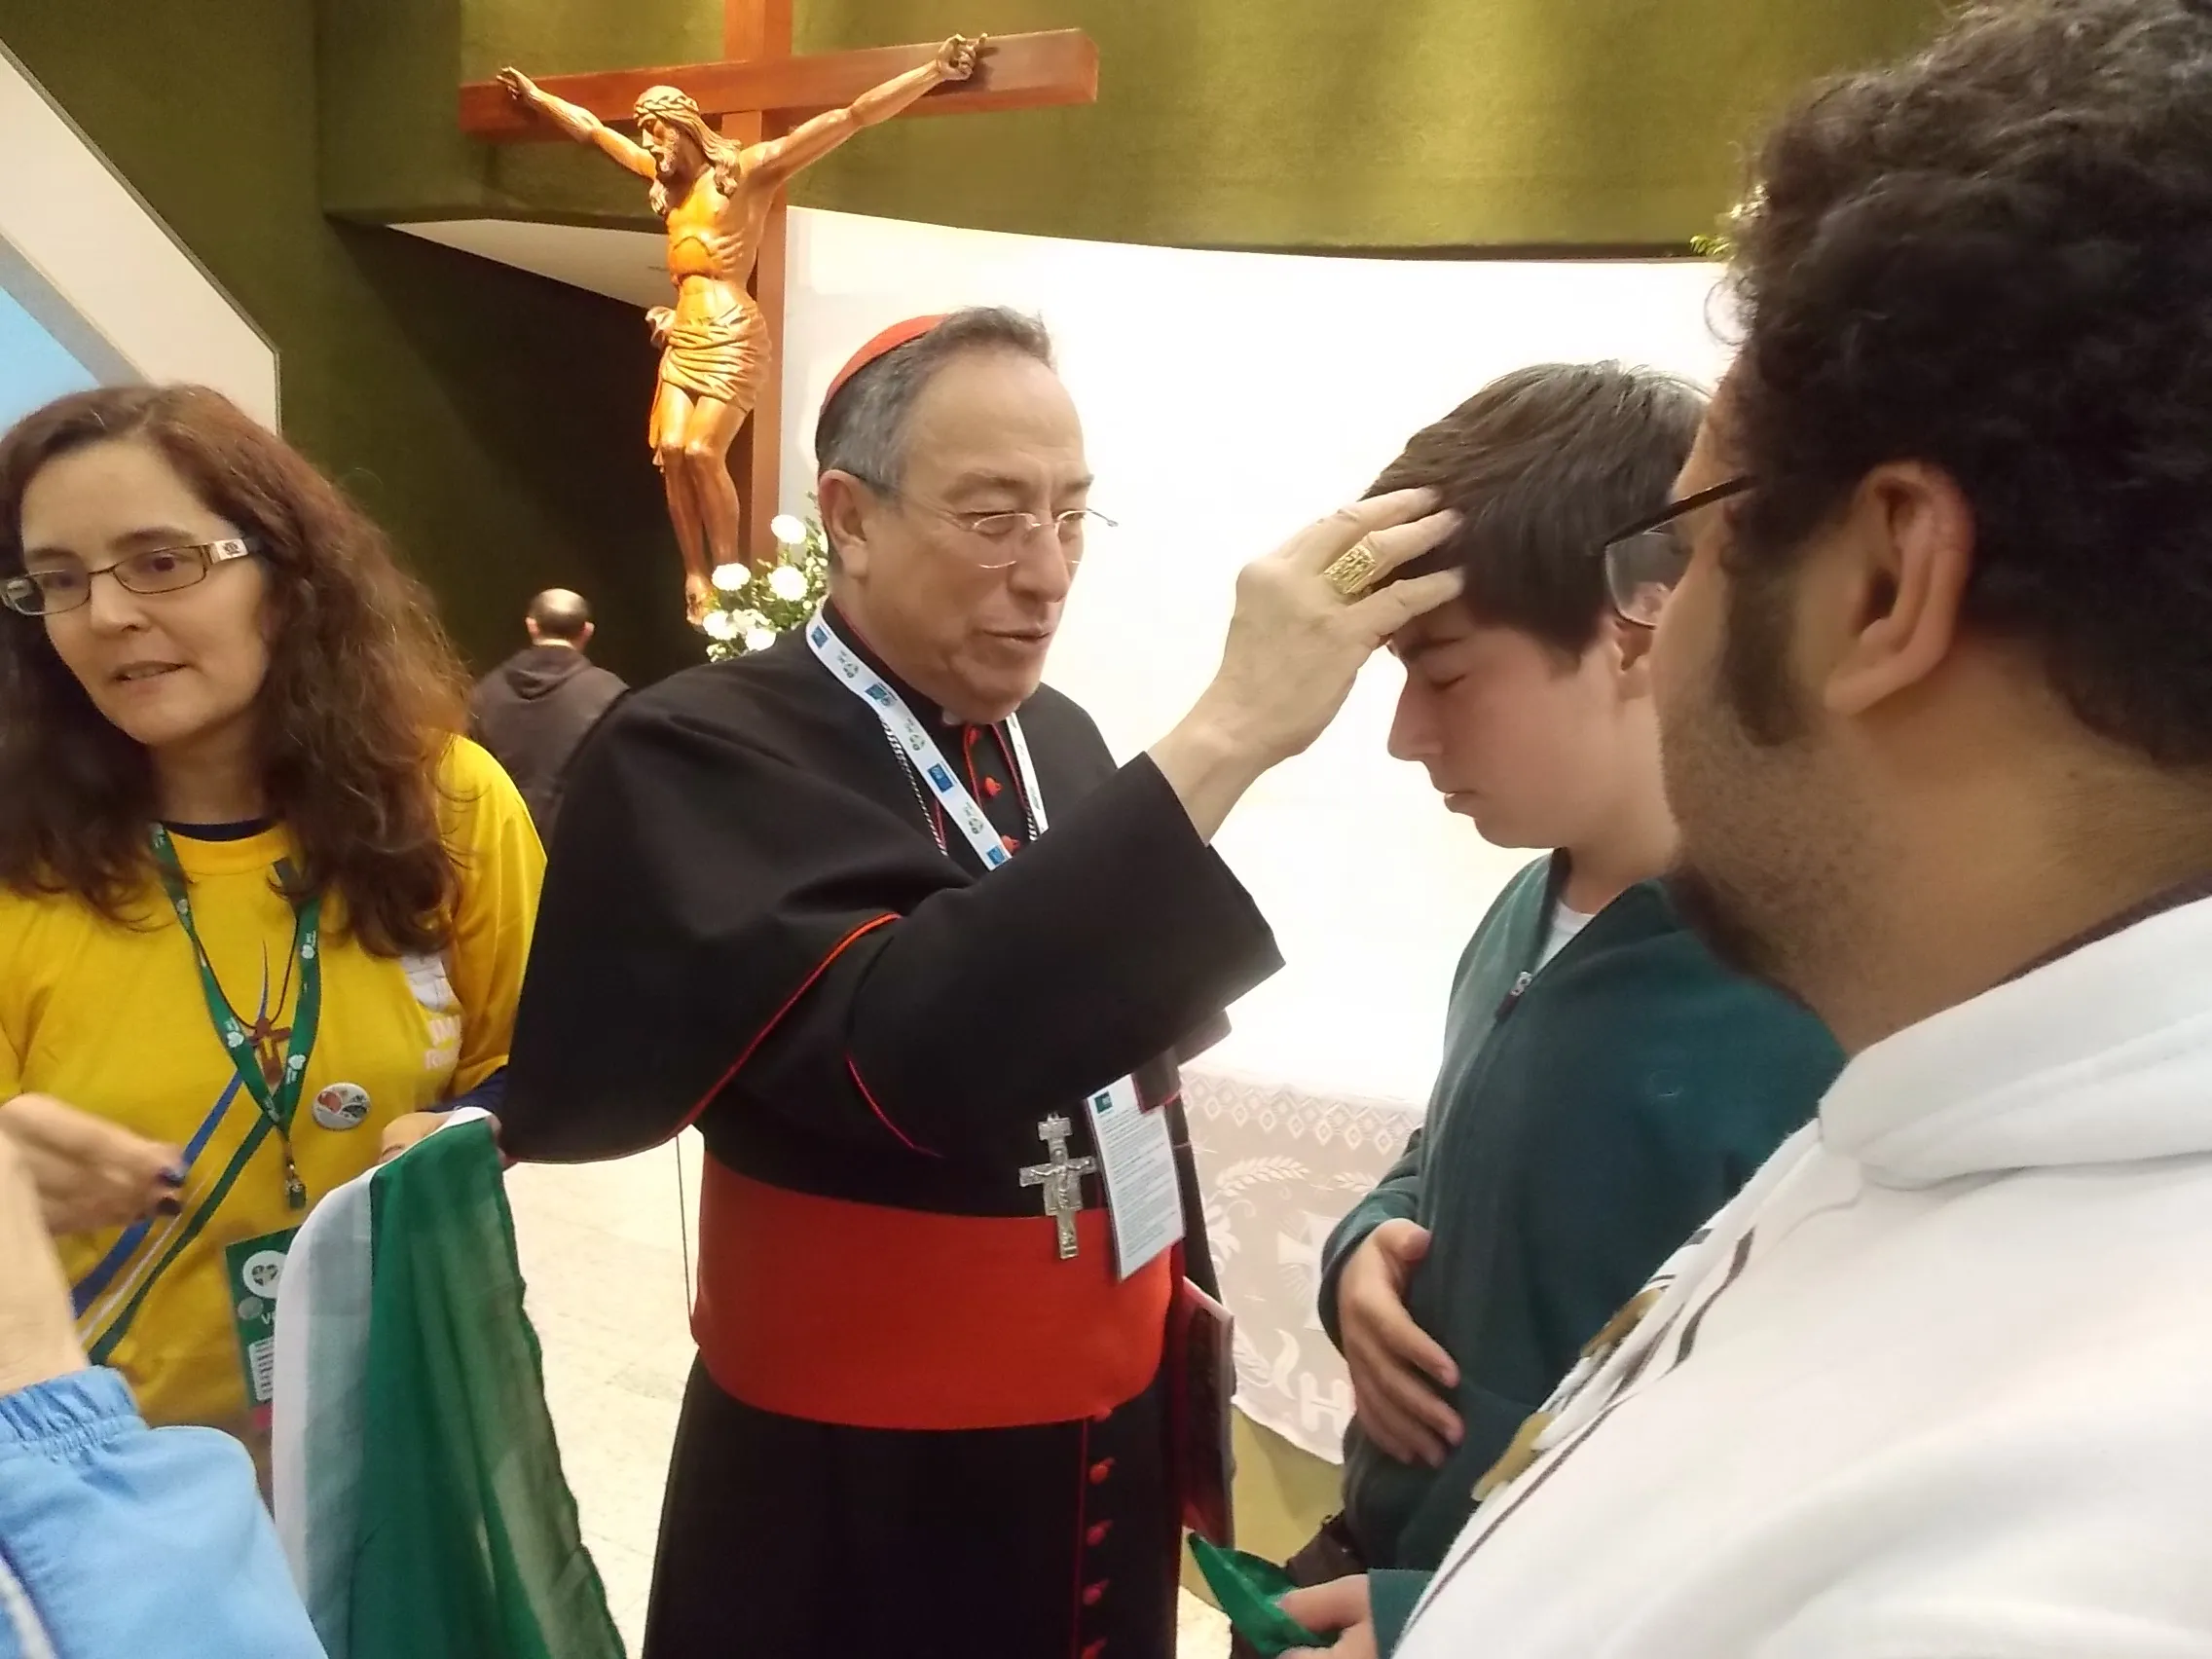 El Cardenal Rodríguez Maradiaga bendice a un peregrino en Río de Janeiro (foto ACI Prensa)?w=200&h=150